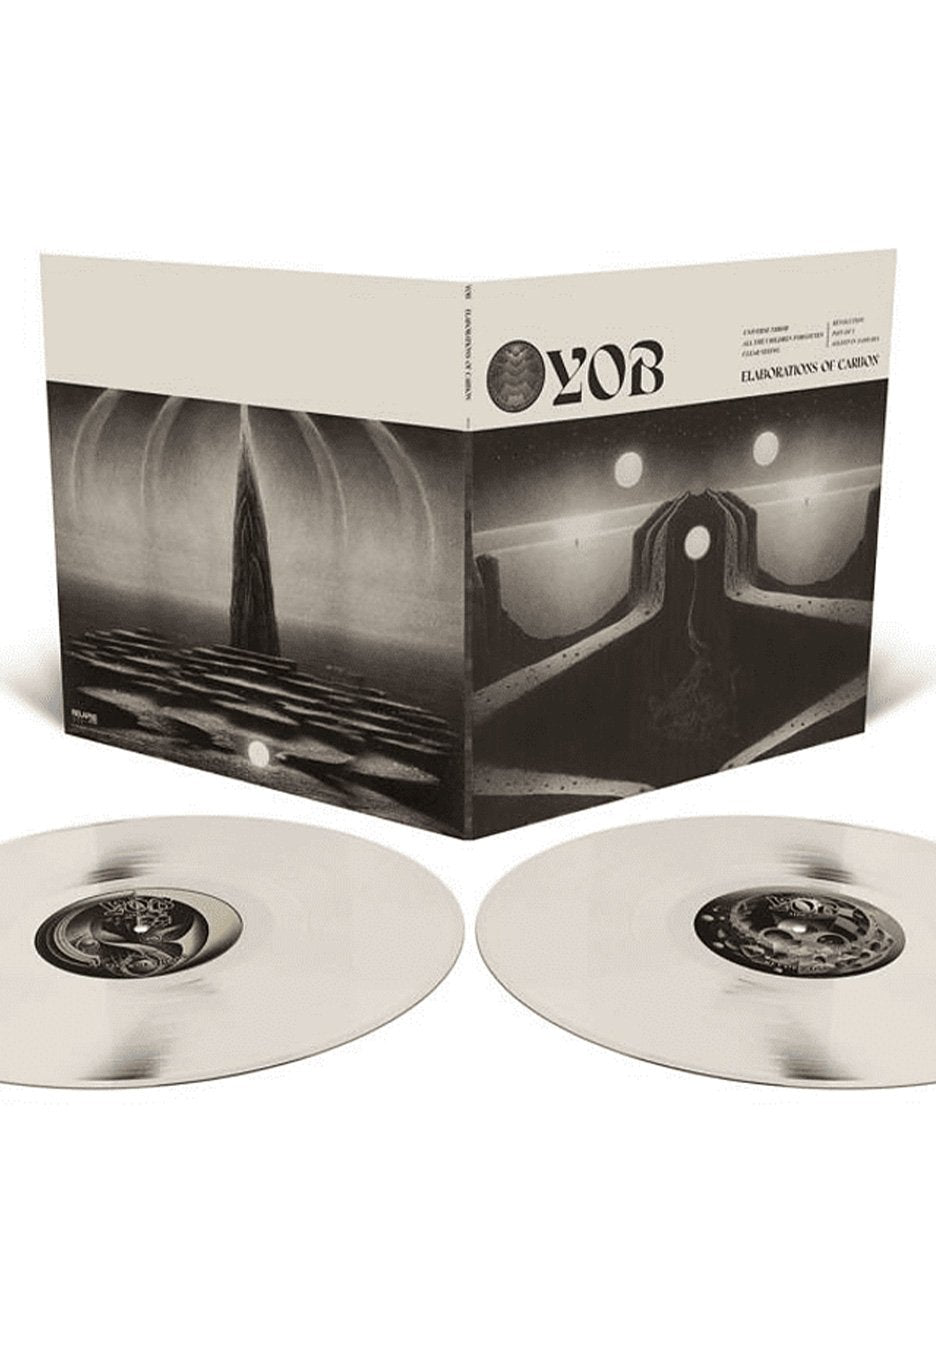 Yob - Elaborations Of Carbon Bone White - Colored 2 Vinyl